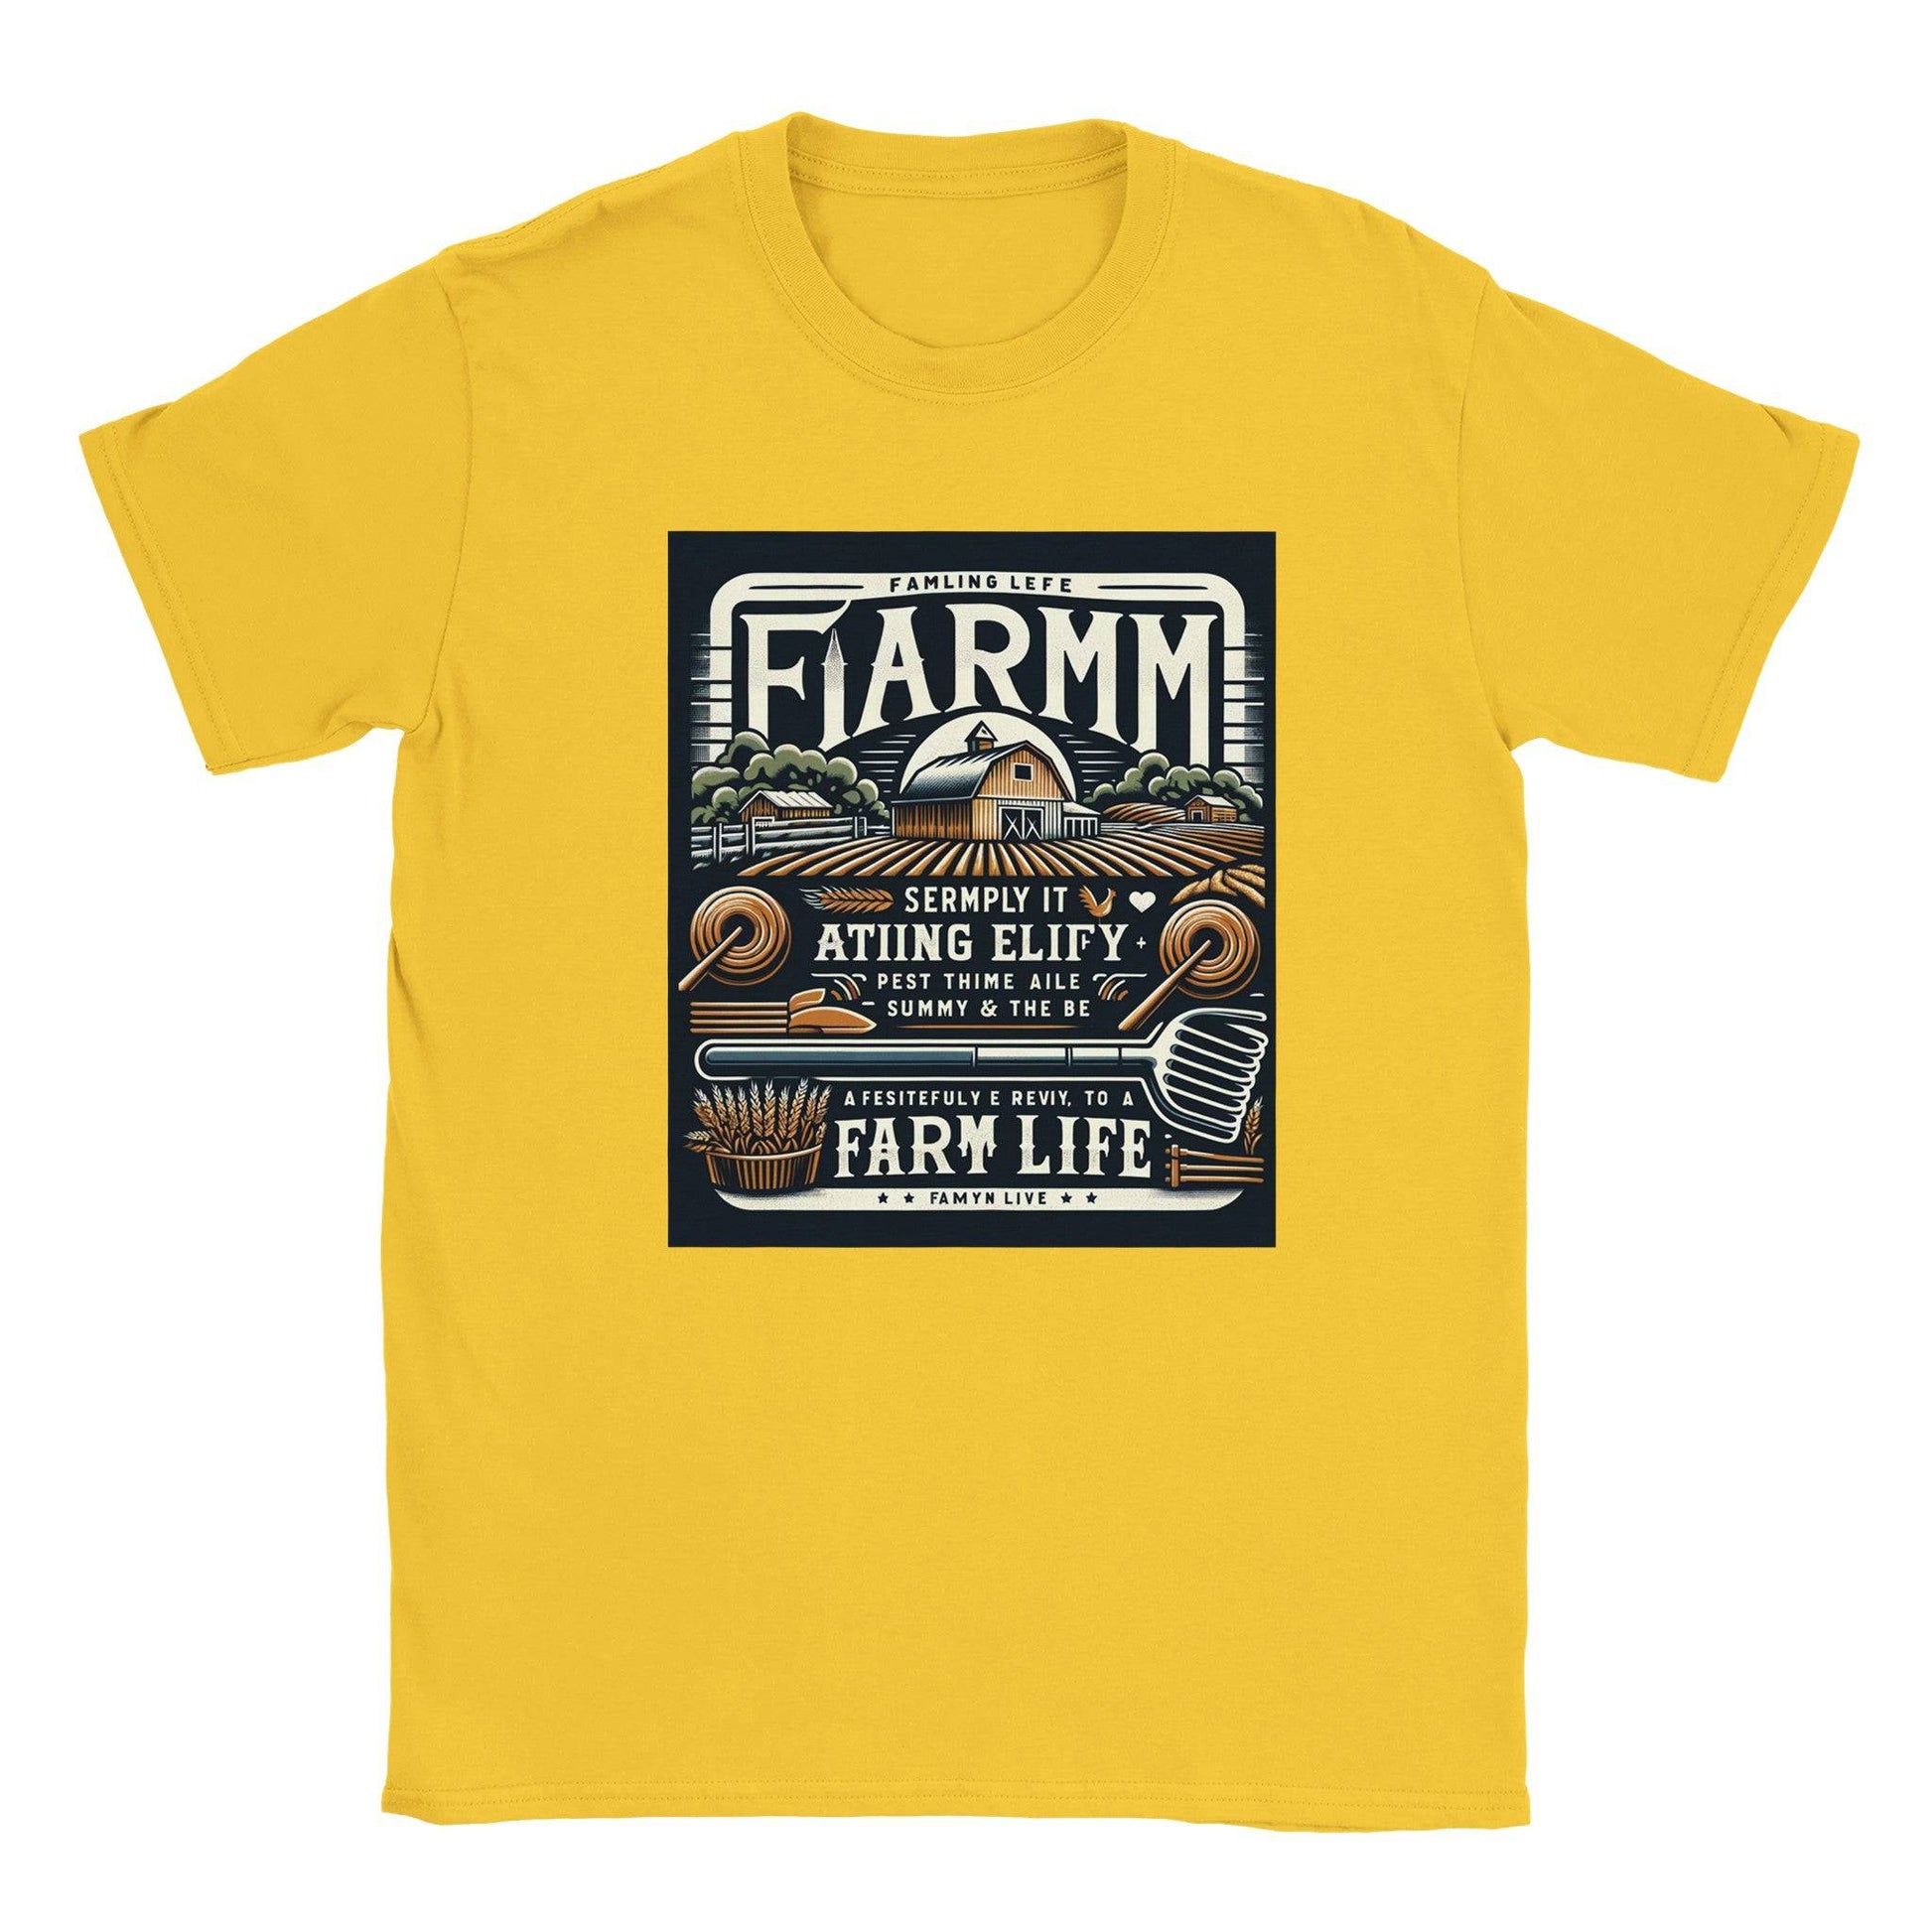 Classic Crewneck "Country Life" Farm T-Shirt - 100% soft, breathable cotton - BeinCart